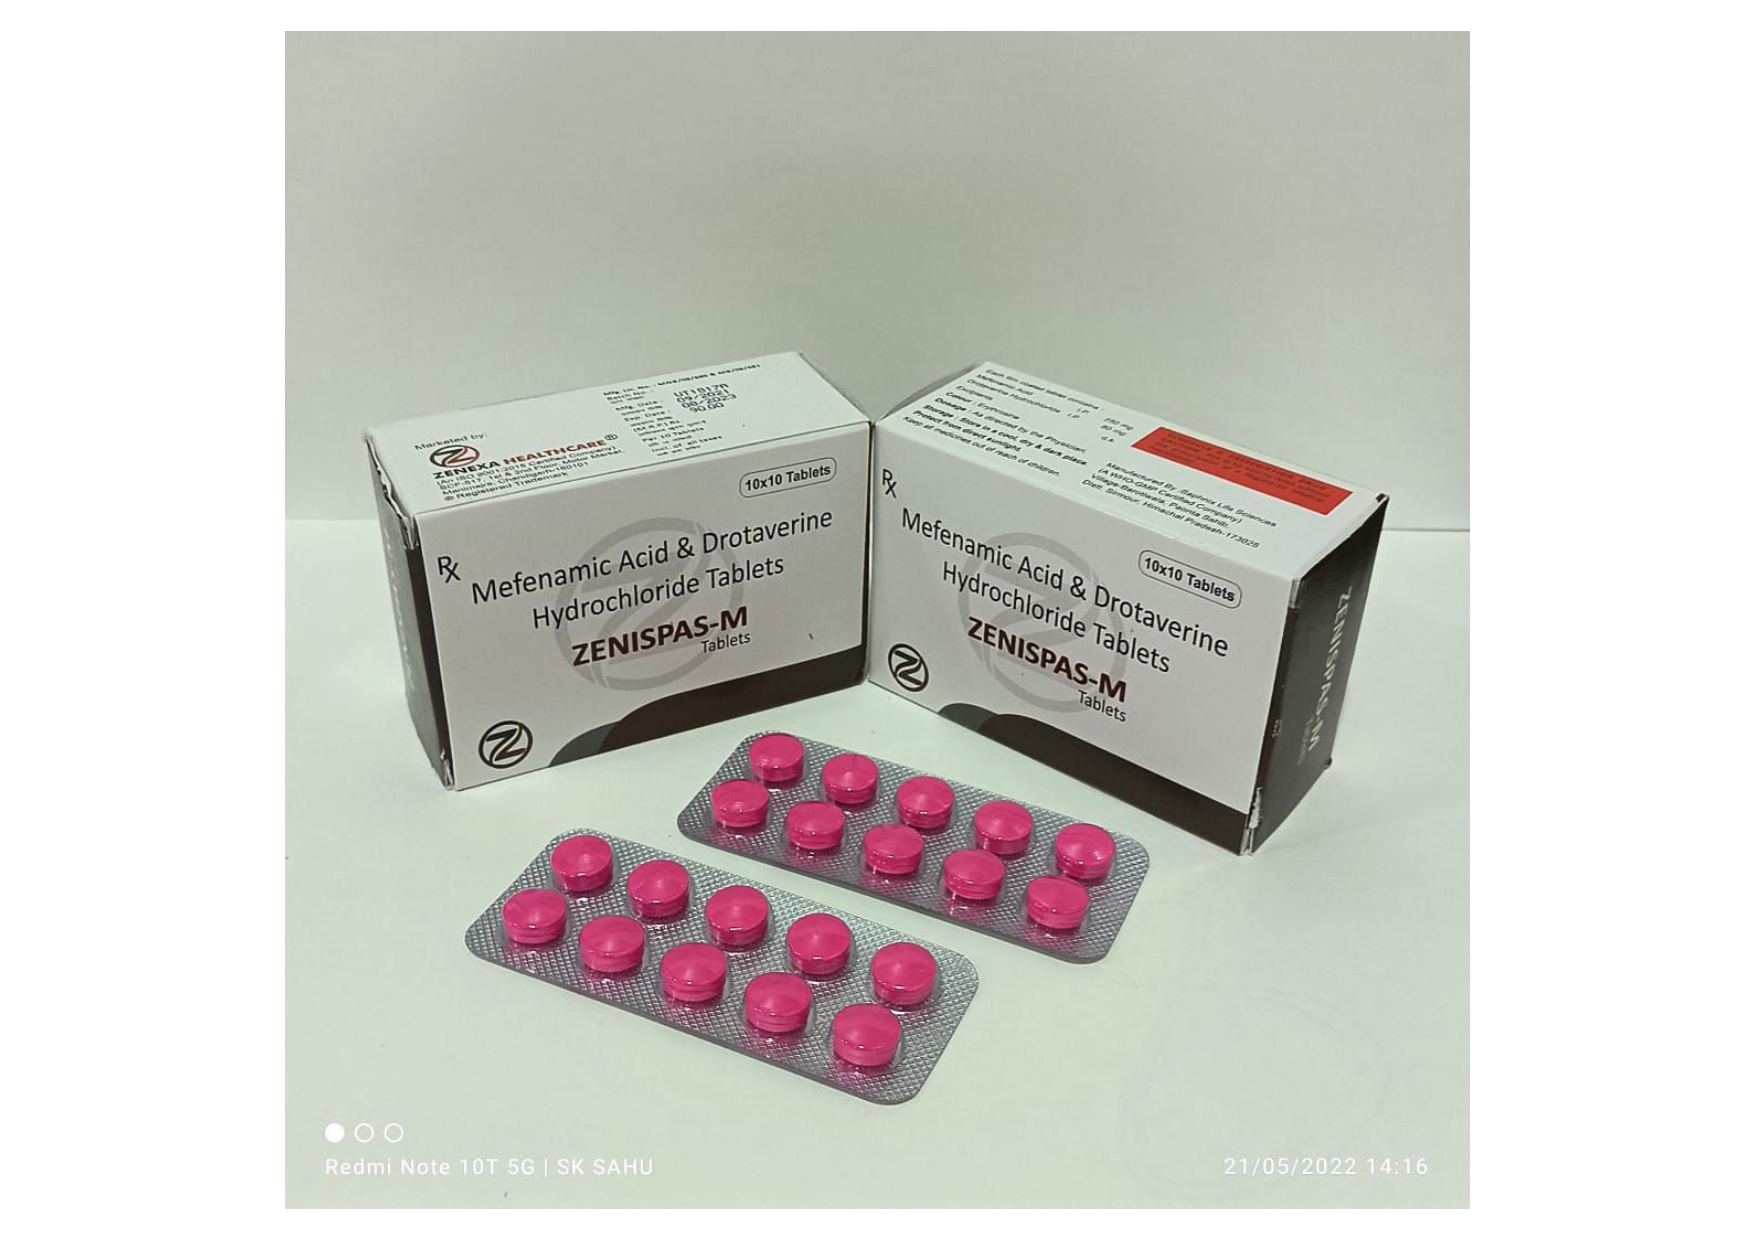 drotaverine hcl 80 mg + mefenamic acid 250mg